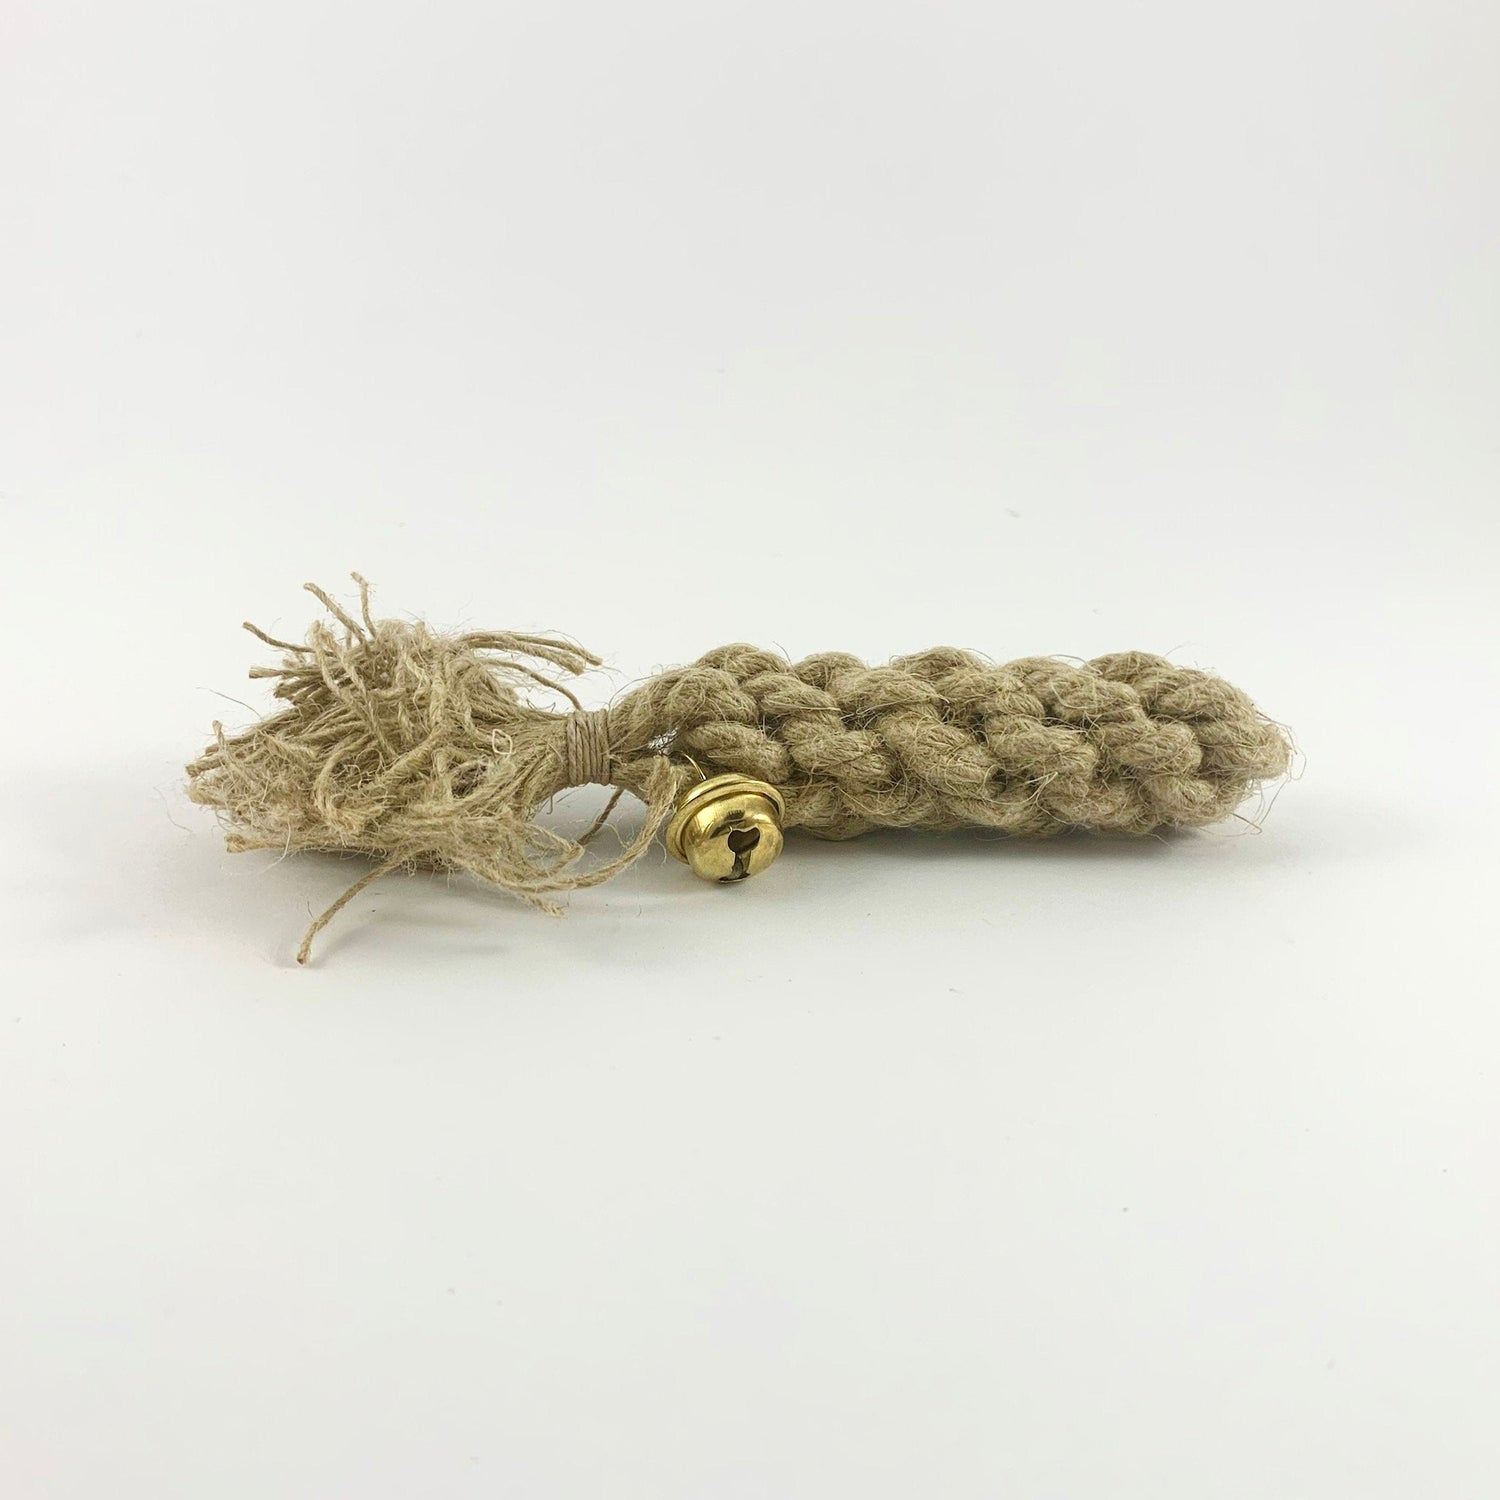 braided natural hemp rope cat toy great altenative